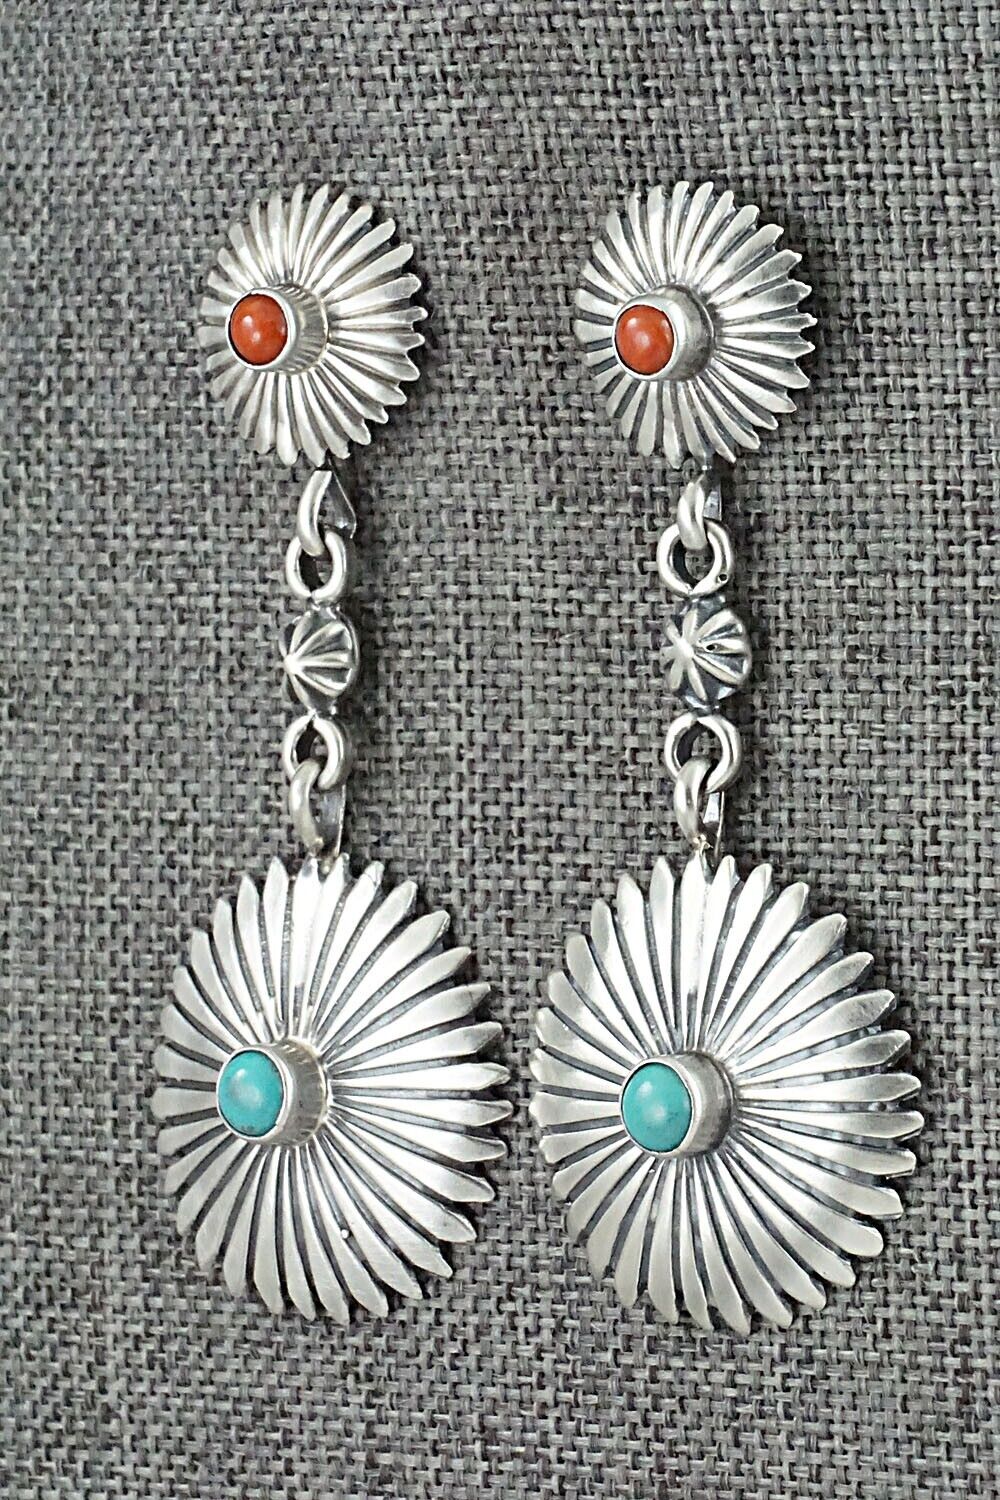 Turquoise, Coral & Sterling Silver Earrings - Verley Betone